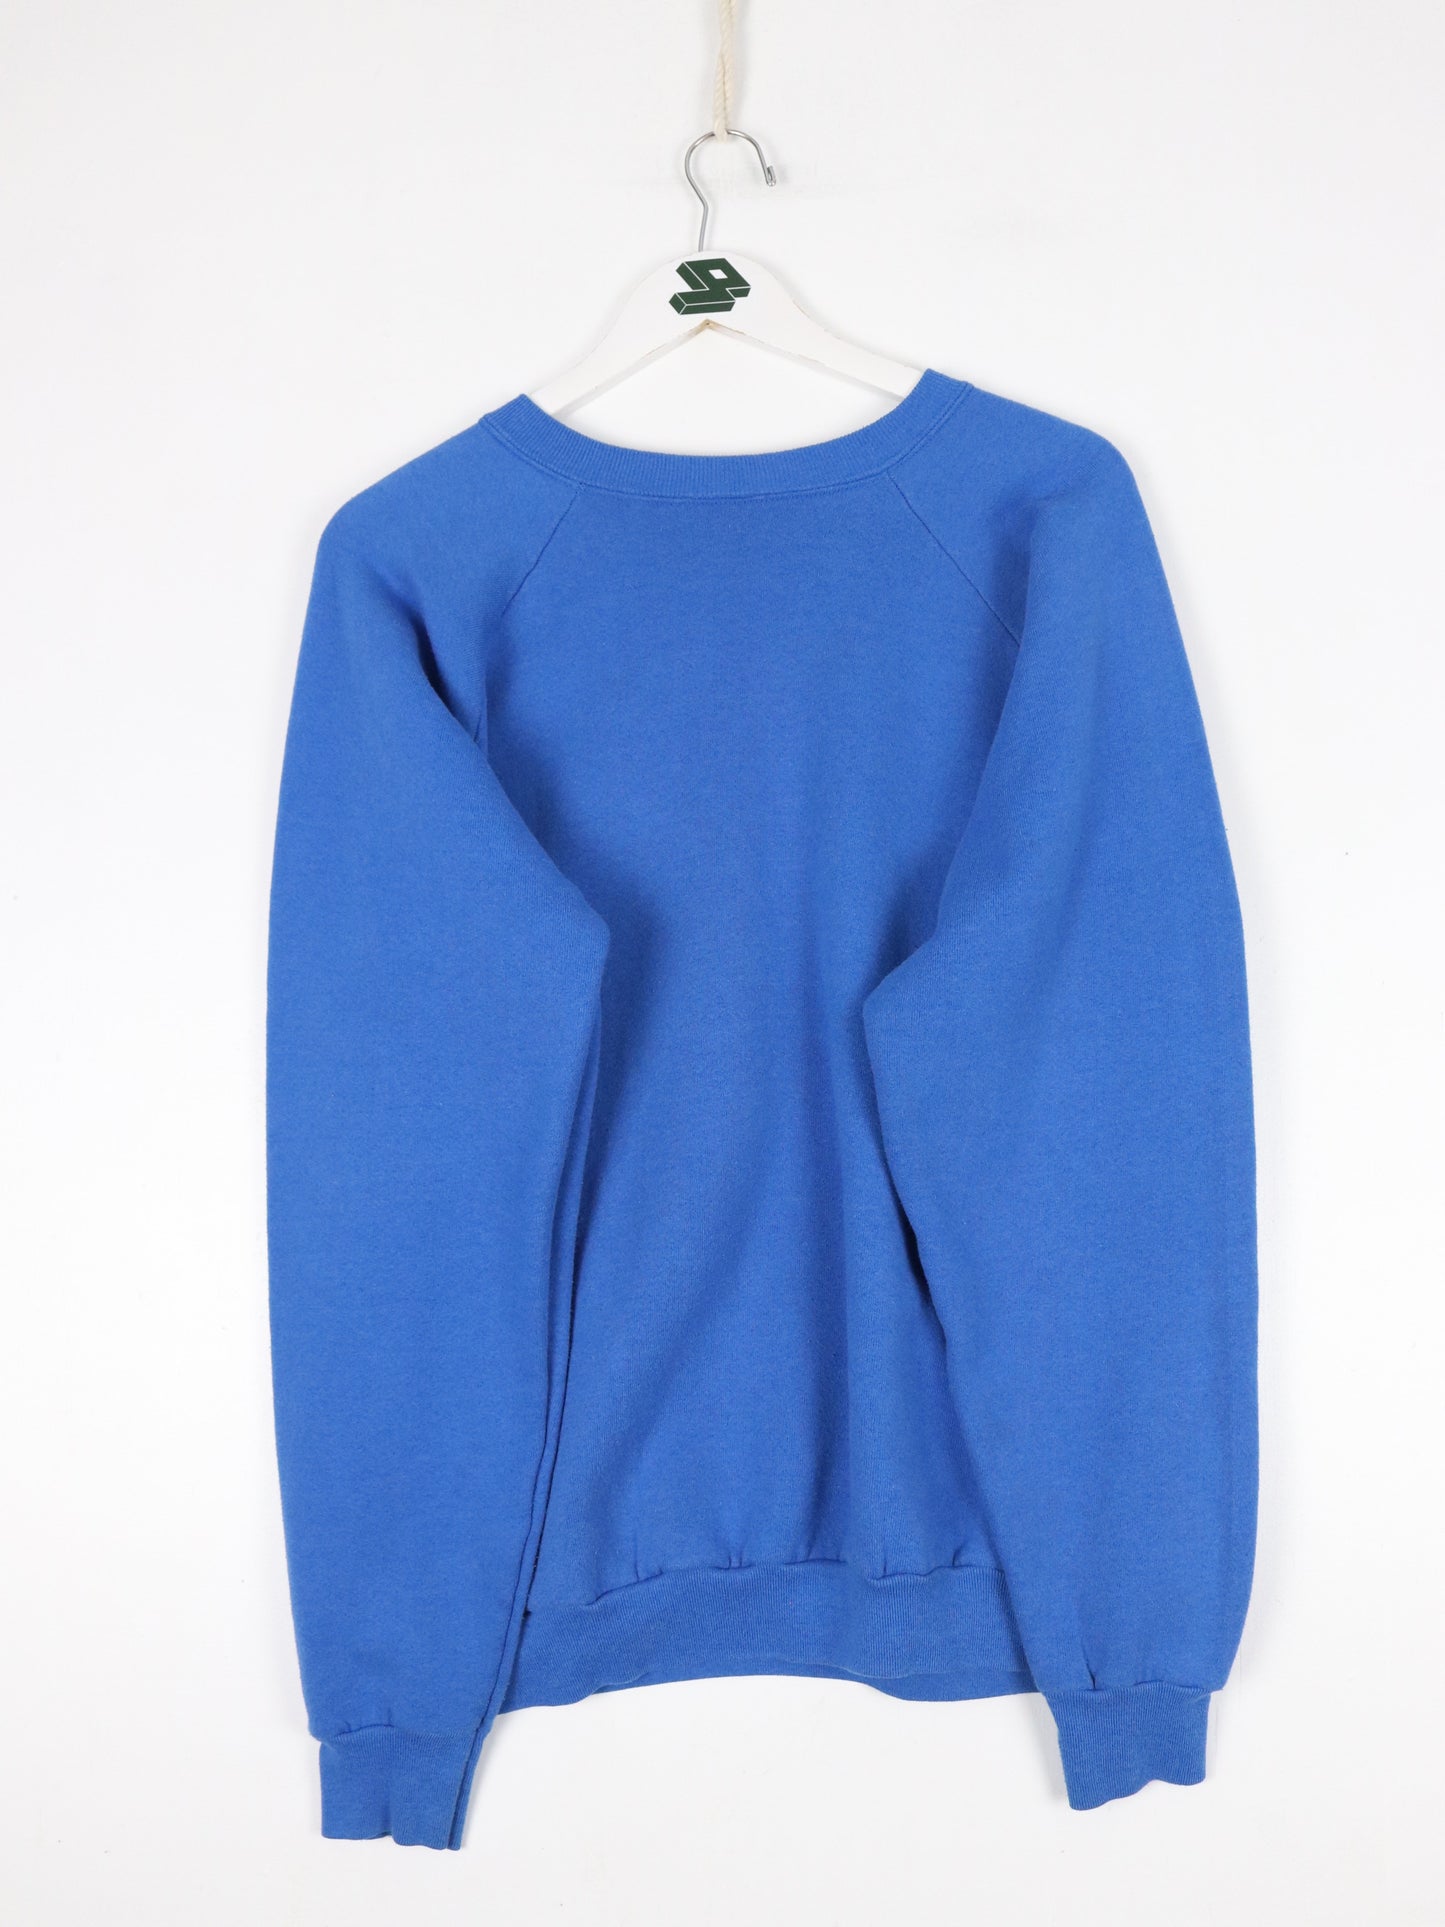 Vintage Jasper Canada Sweatshirt Fits Mens Large Blue 90s